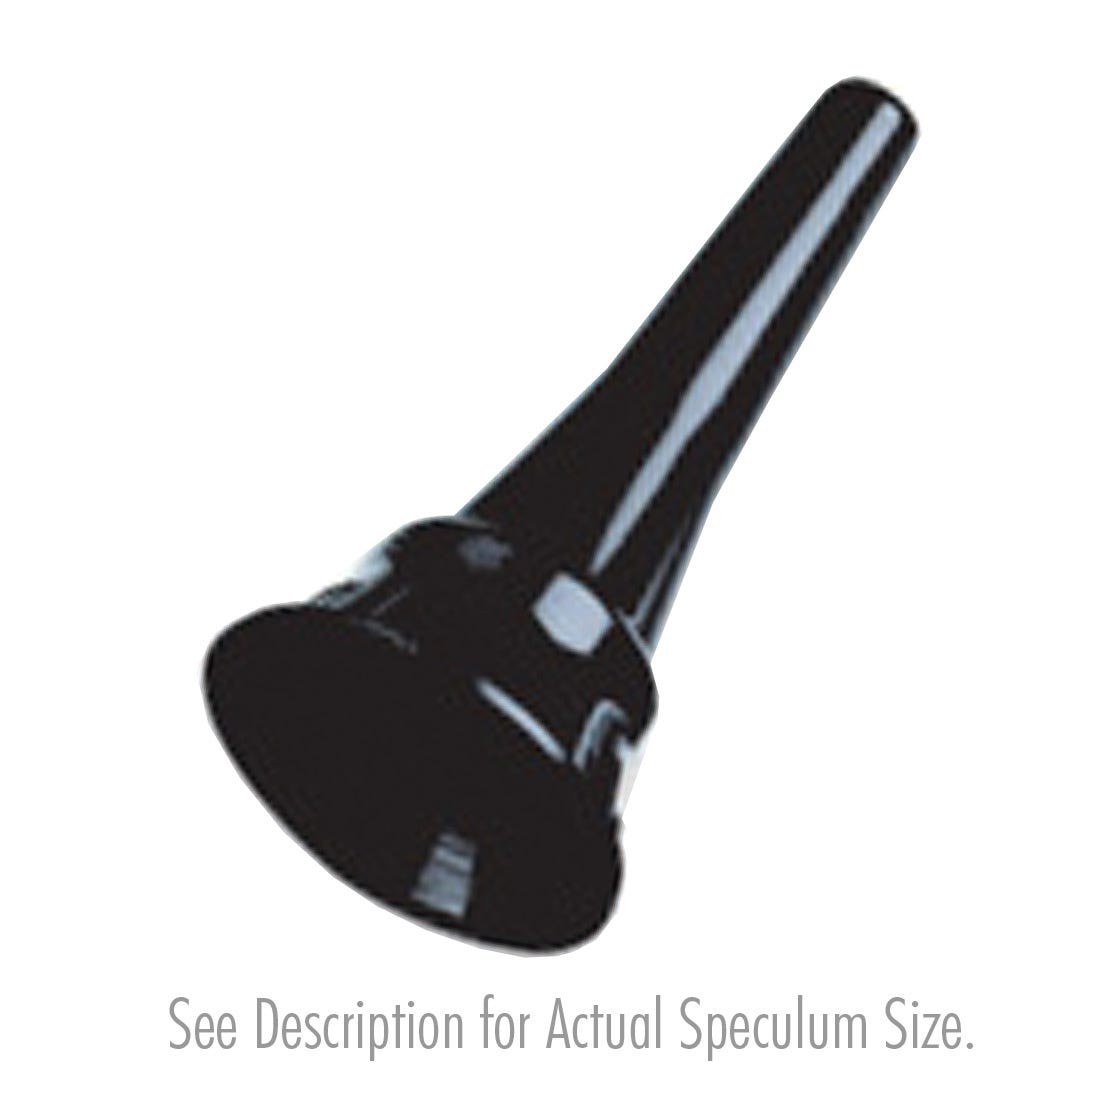 Otoscope Specula for 3.5v and 2.5v Otoscopes - 5mm Speculum Tip